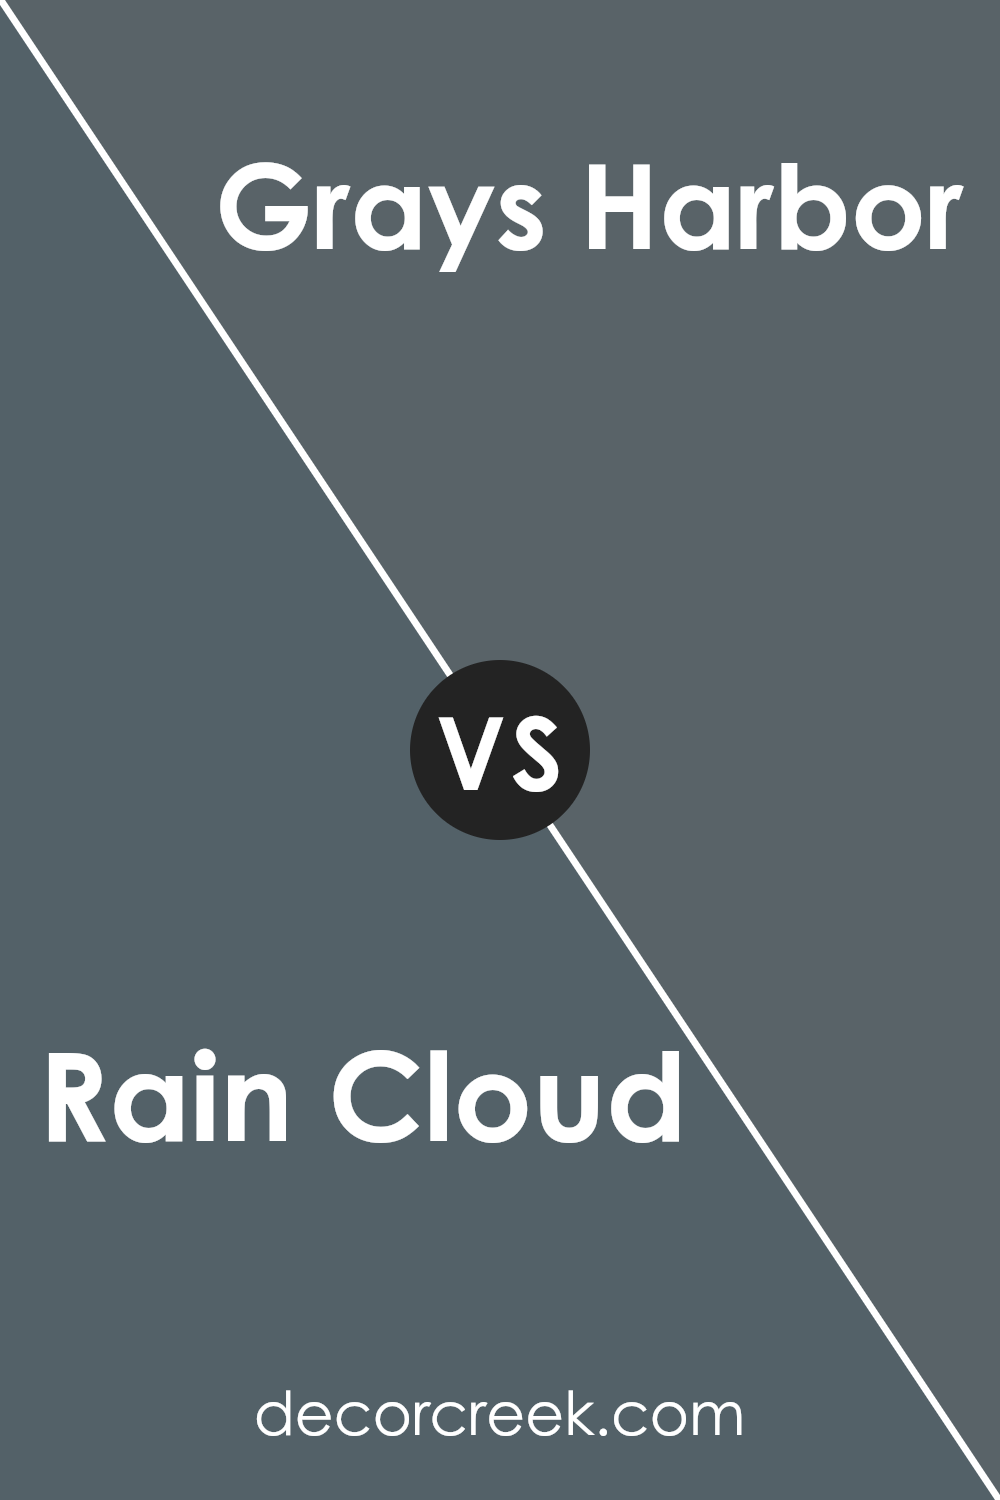 rain_cloud_sw_9639_vs_grays_harbor_sw_6236